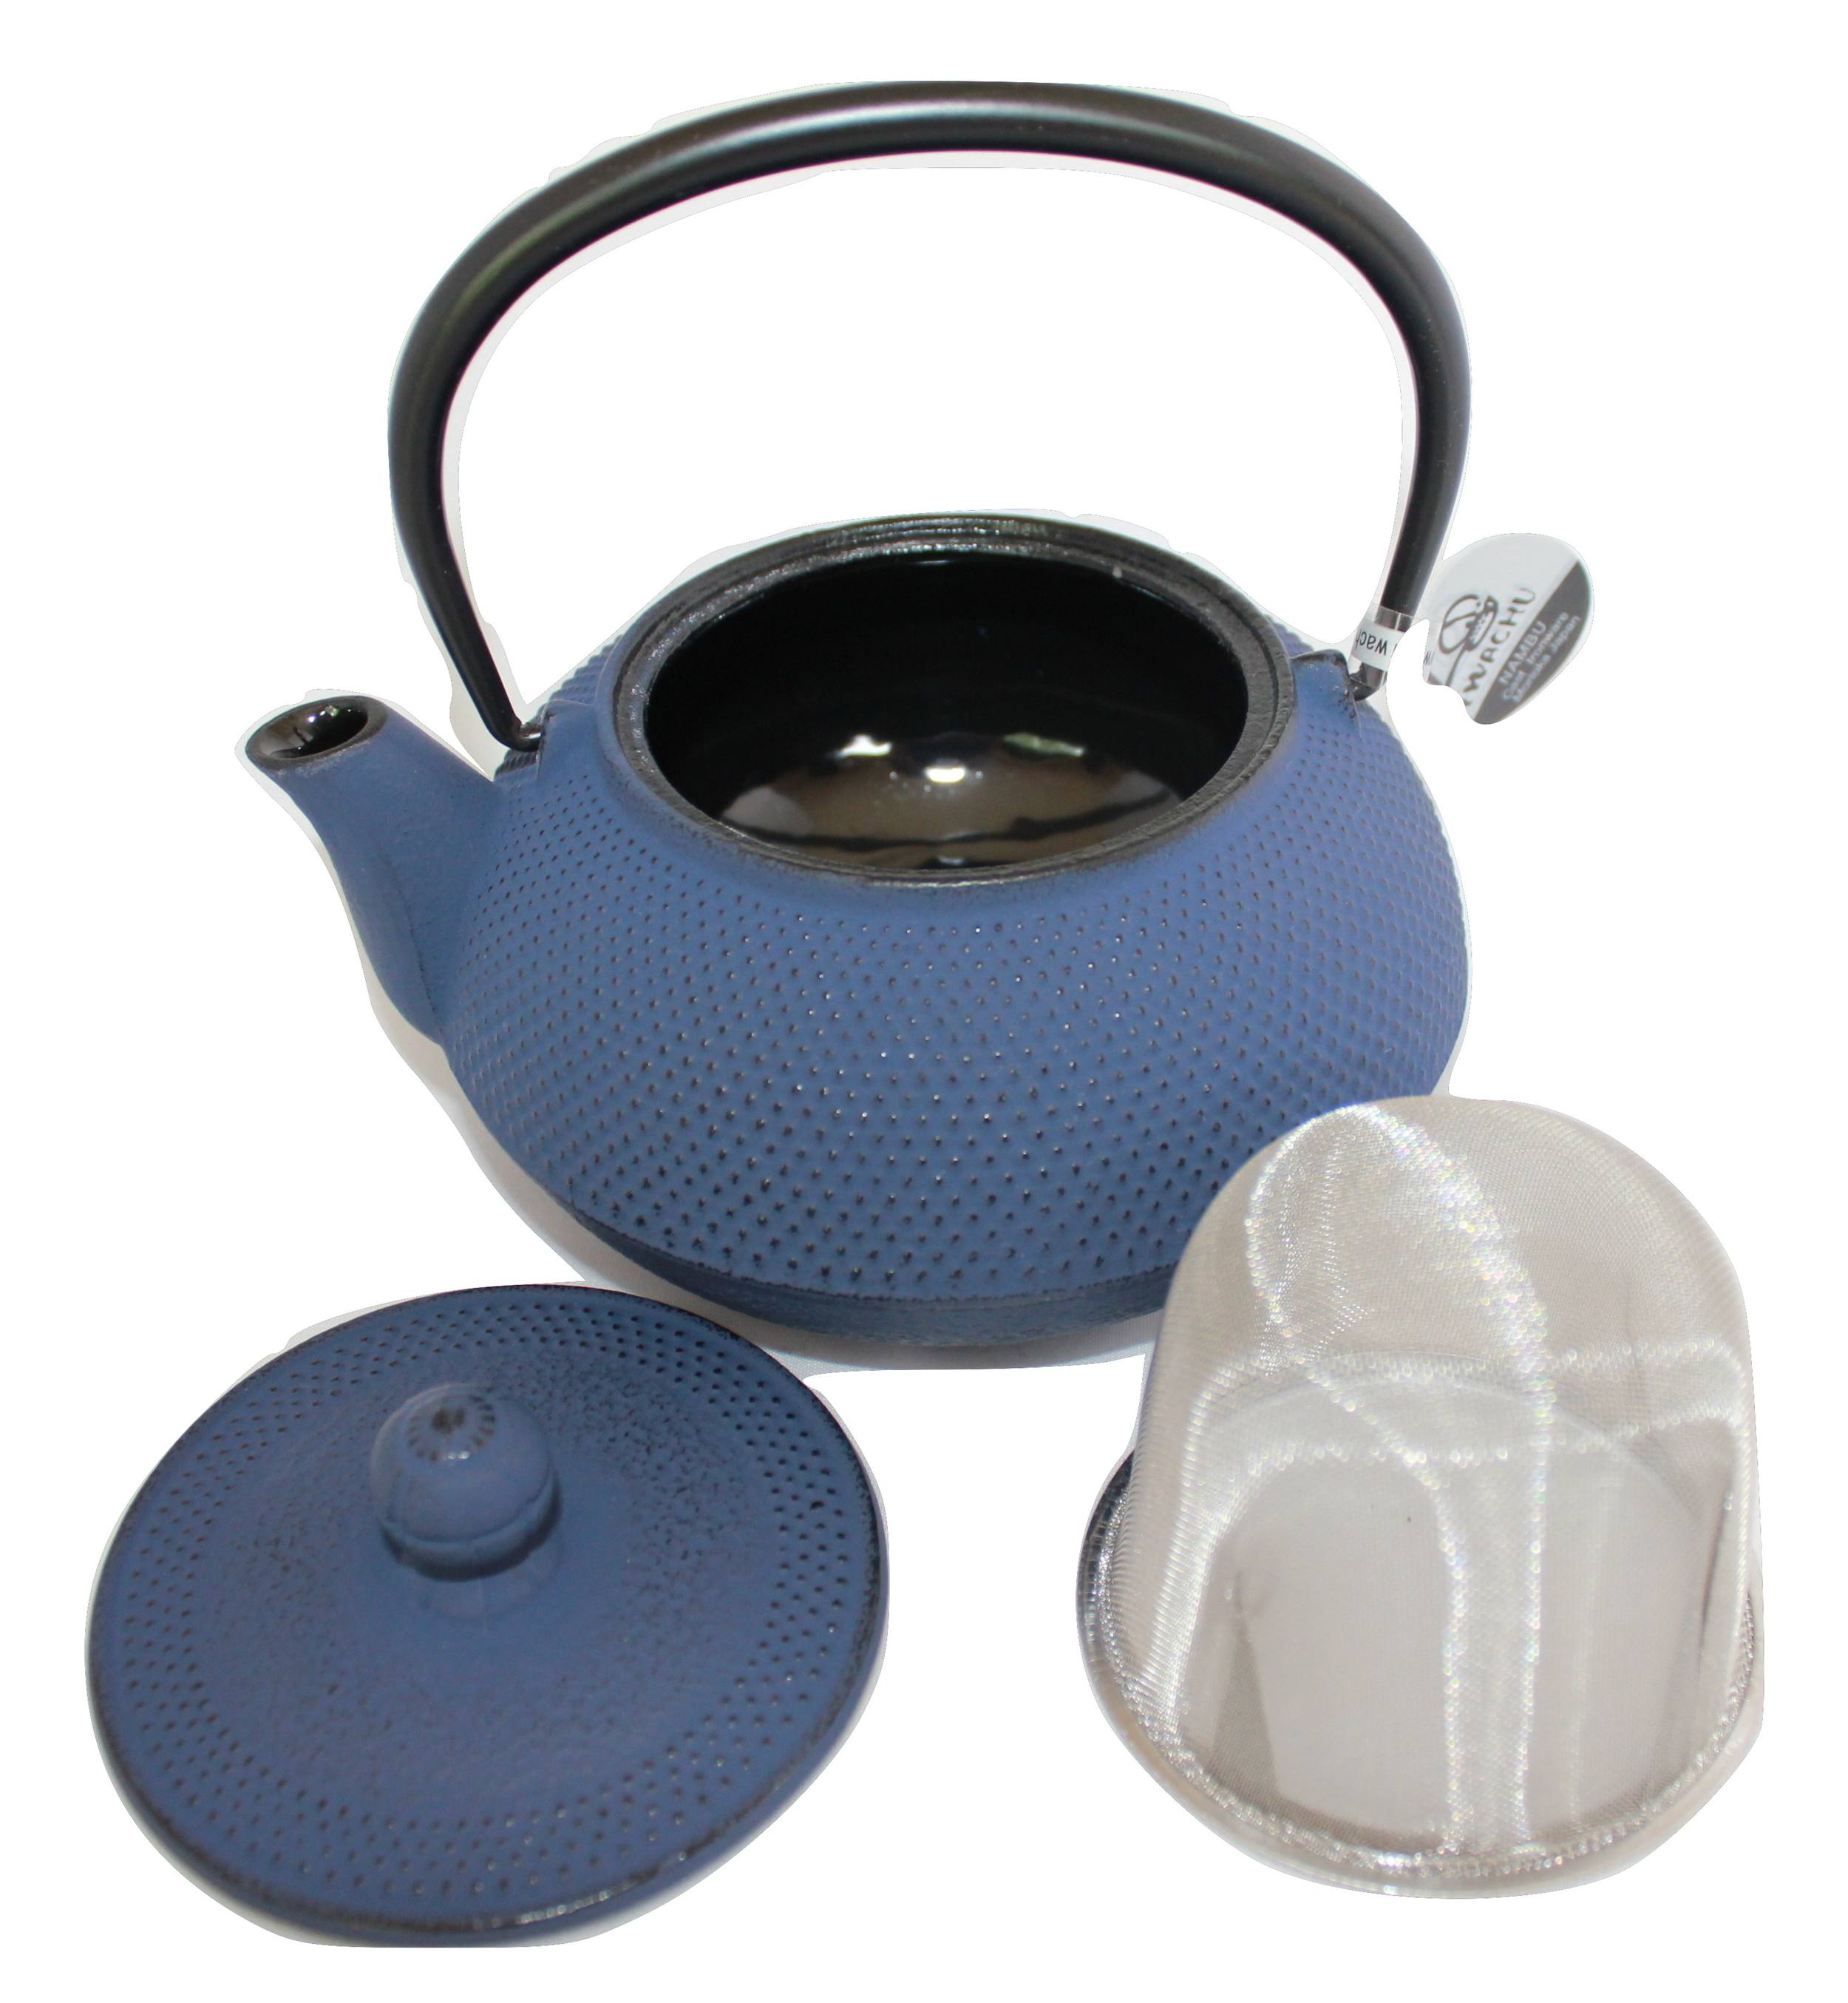 IWACHU Japanese Cast Iron Kettle/Teapot ARARE and Trivet Set 0.65L